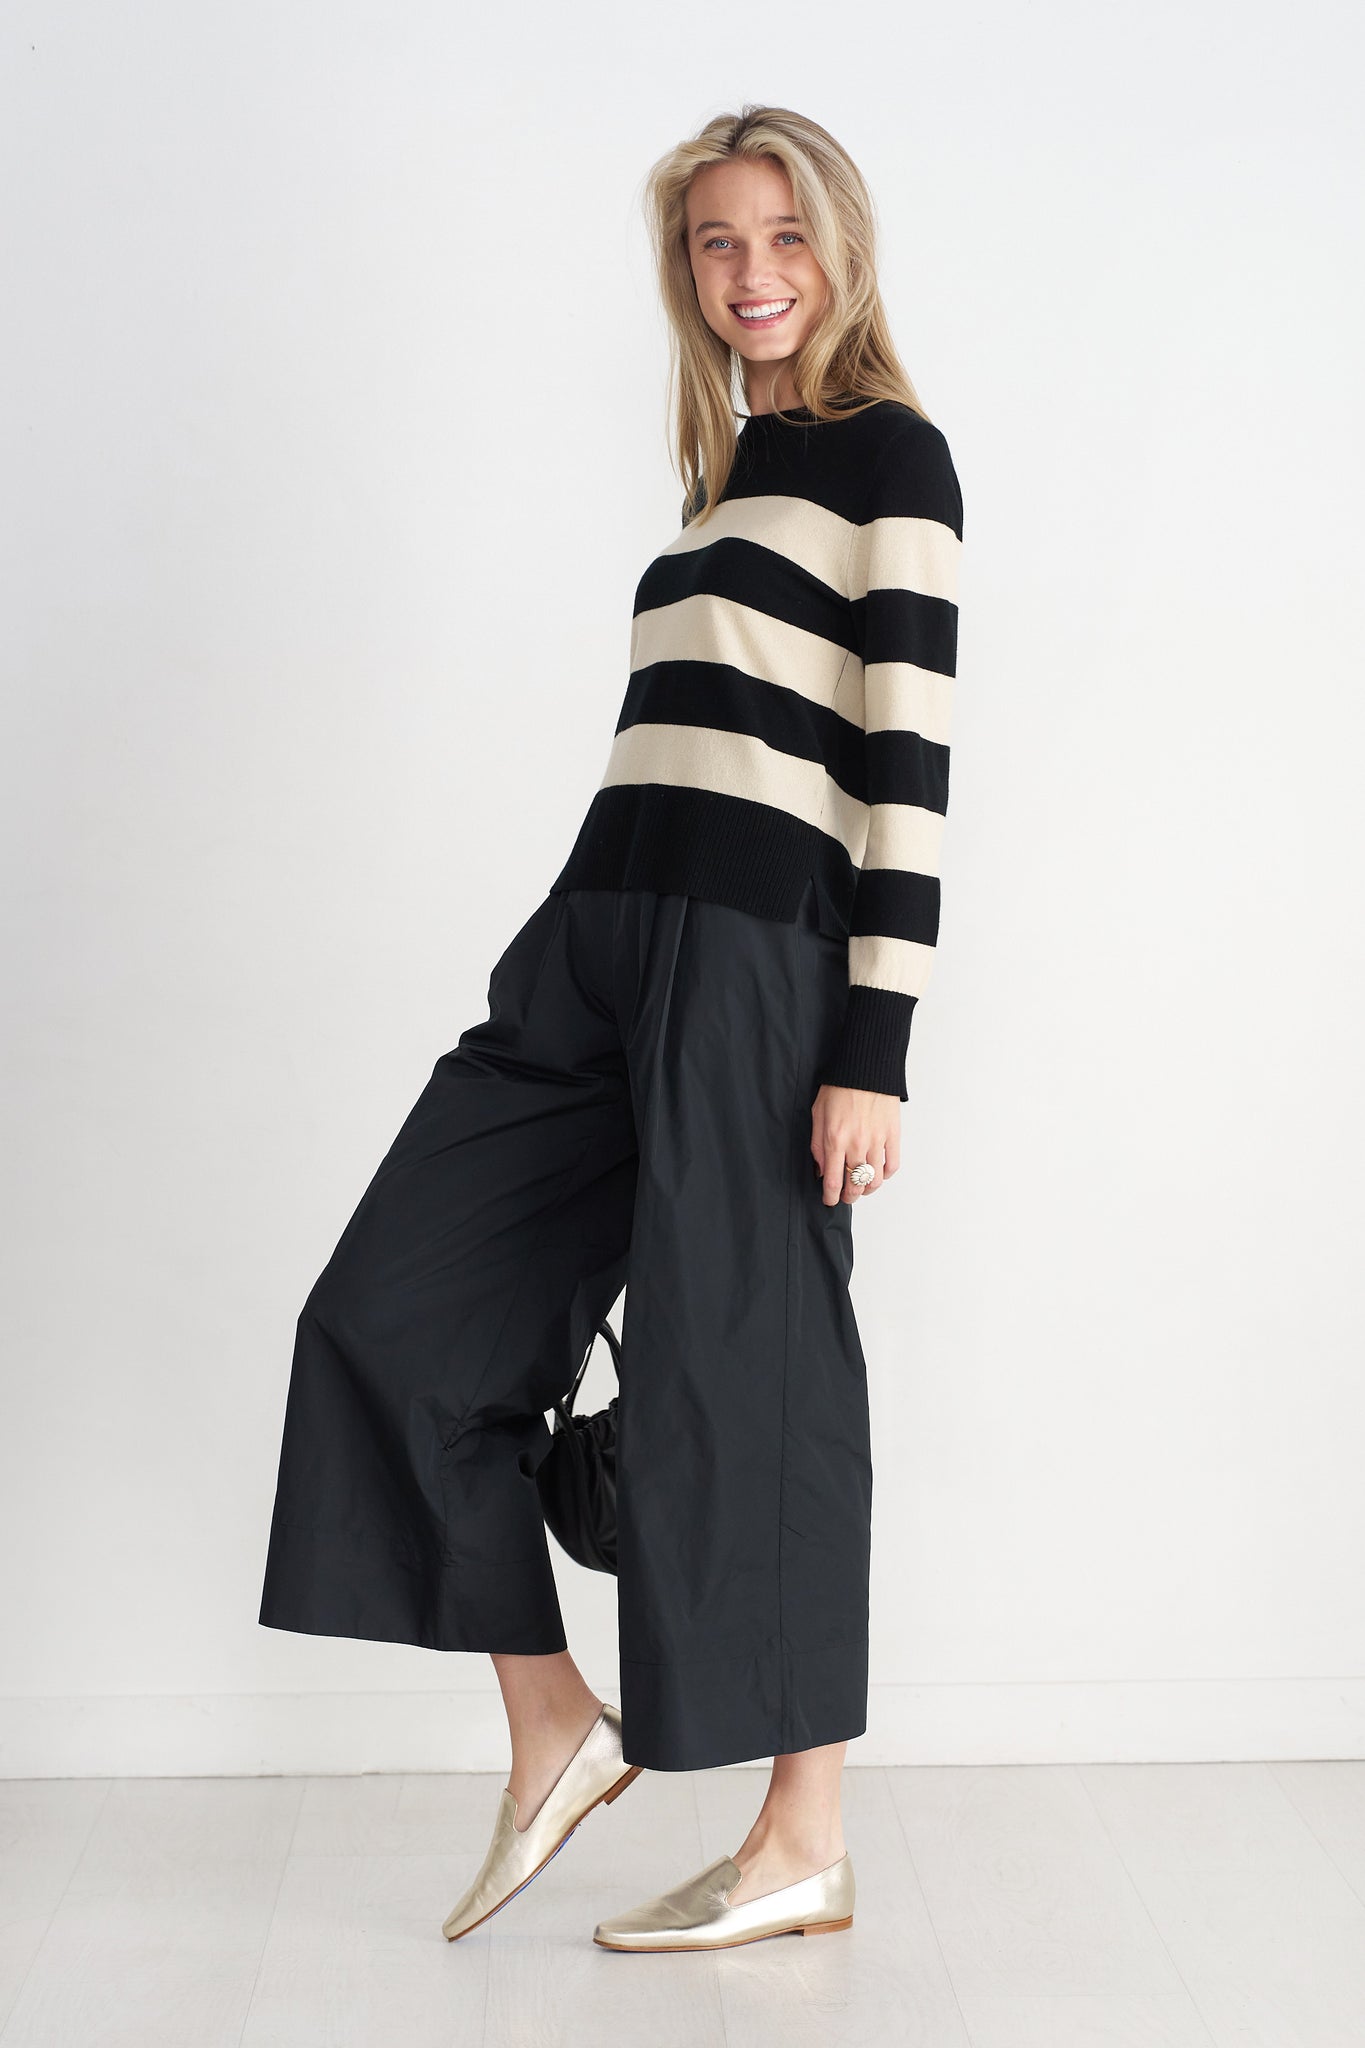 Allude - Striped Sweater, Beach & Noir